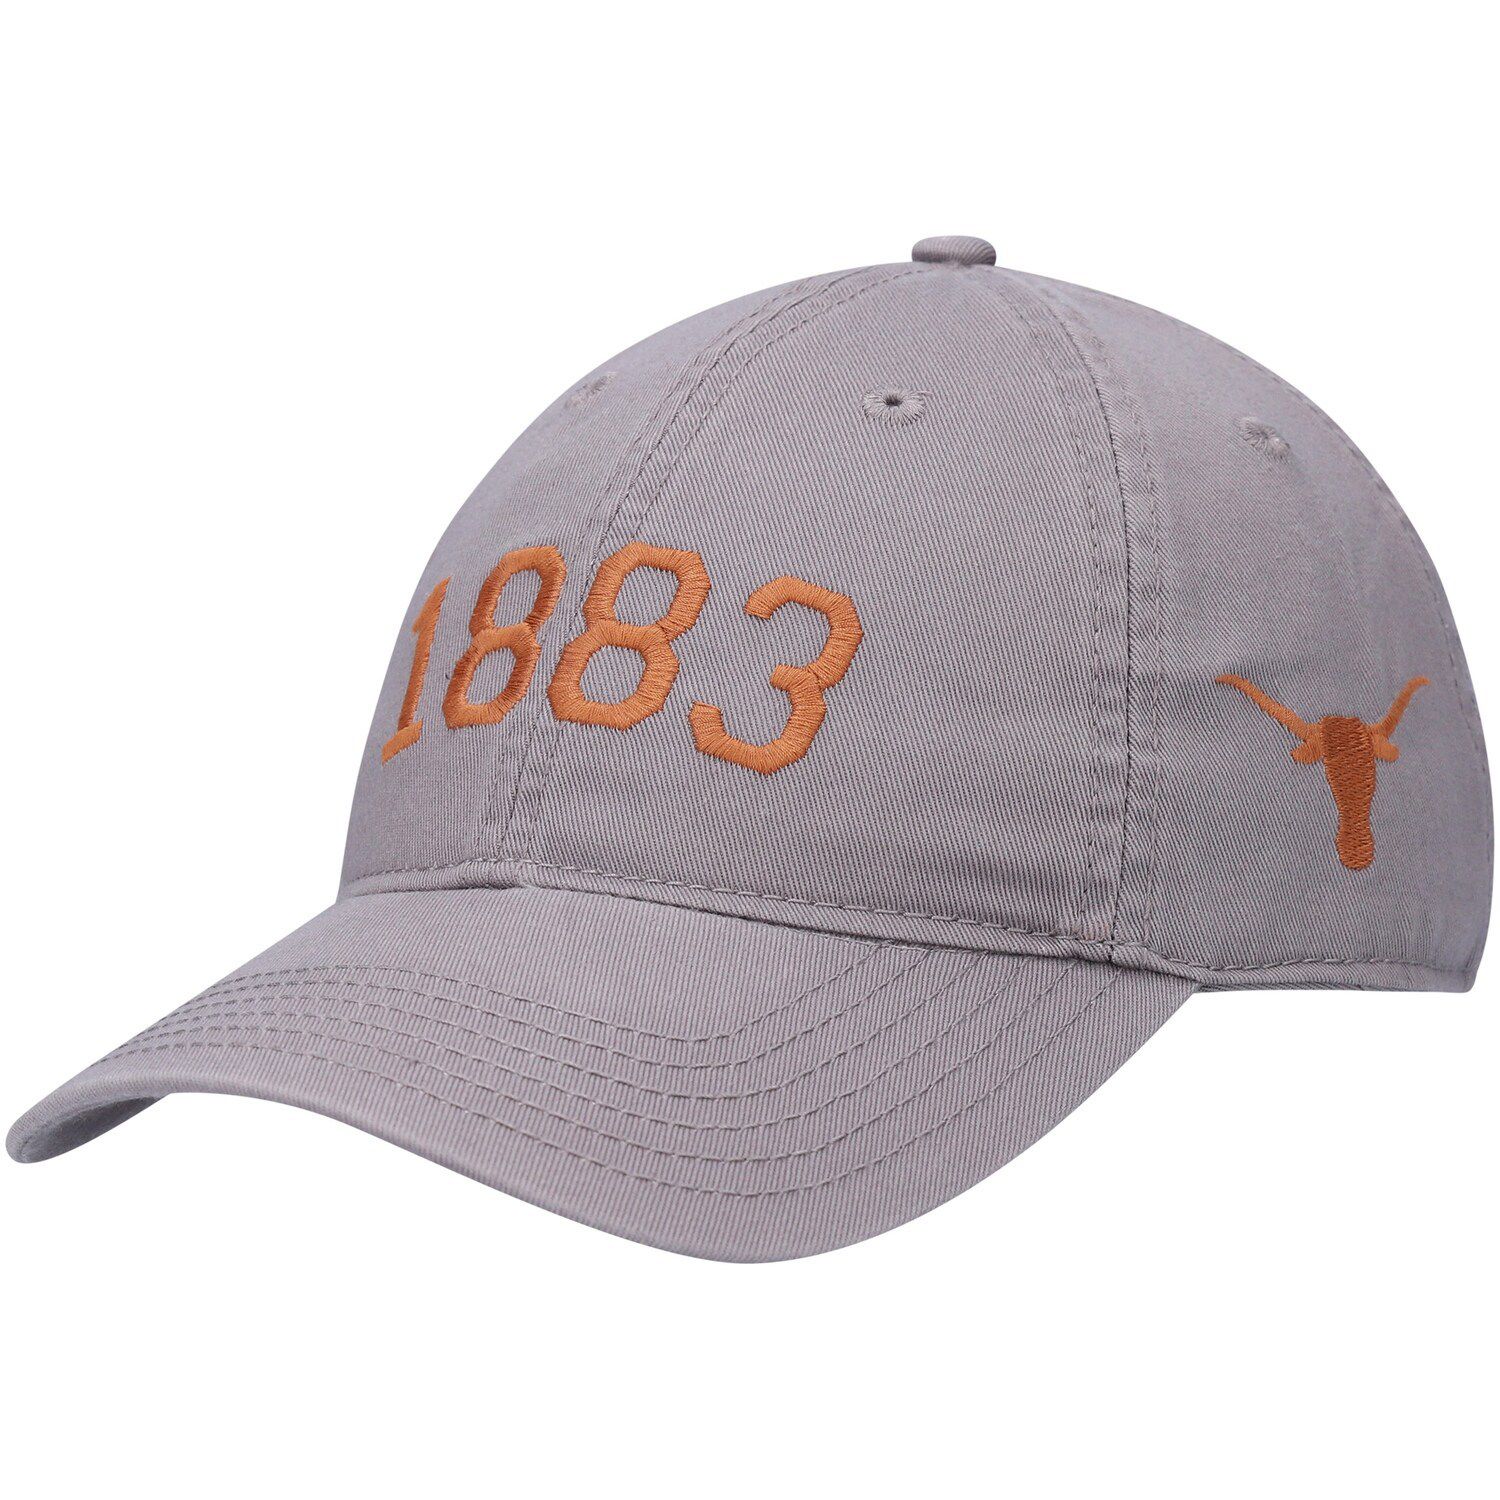 Image for Unbranded Men's Gray Texas Longhorns Radius Adjustable Hat at Kohl's.